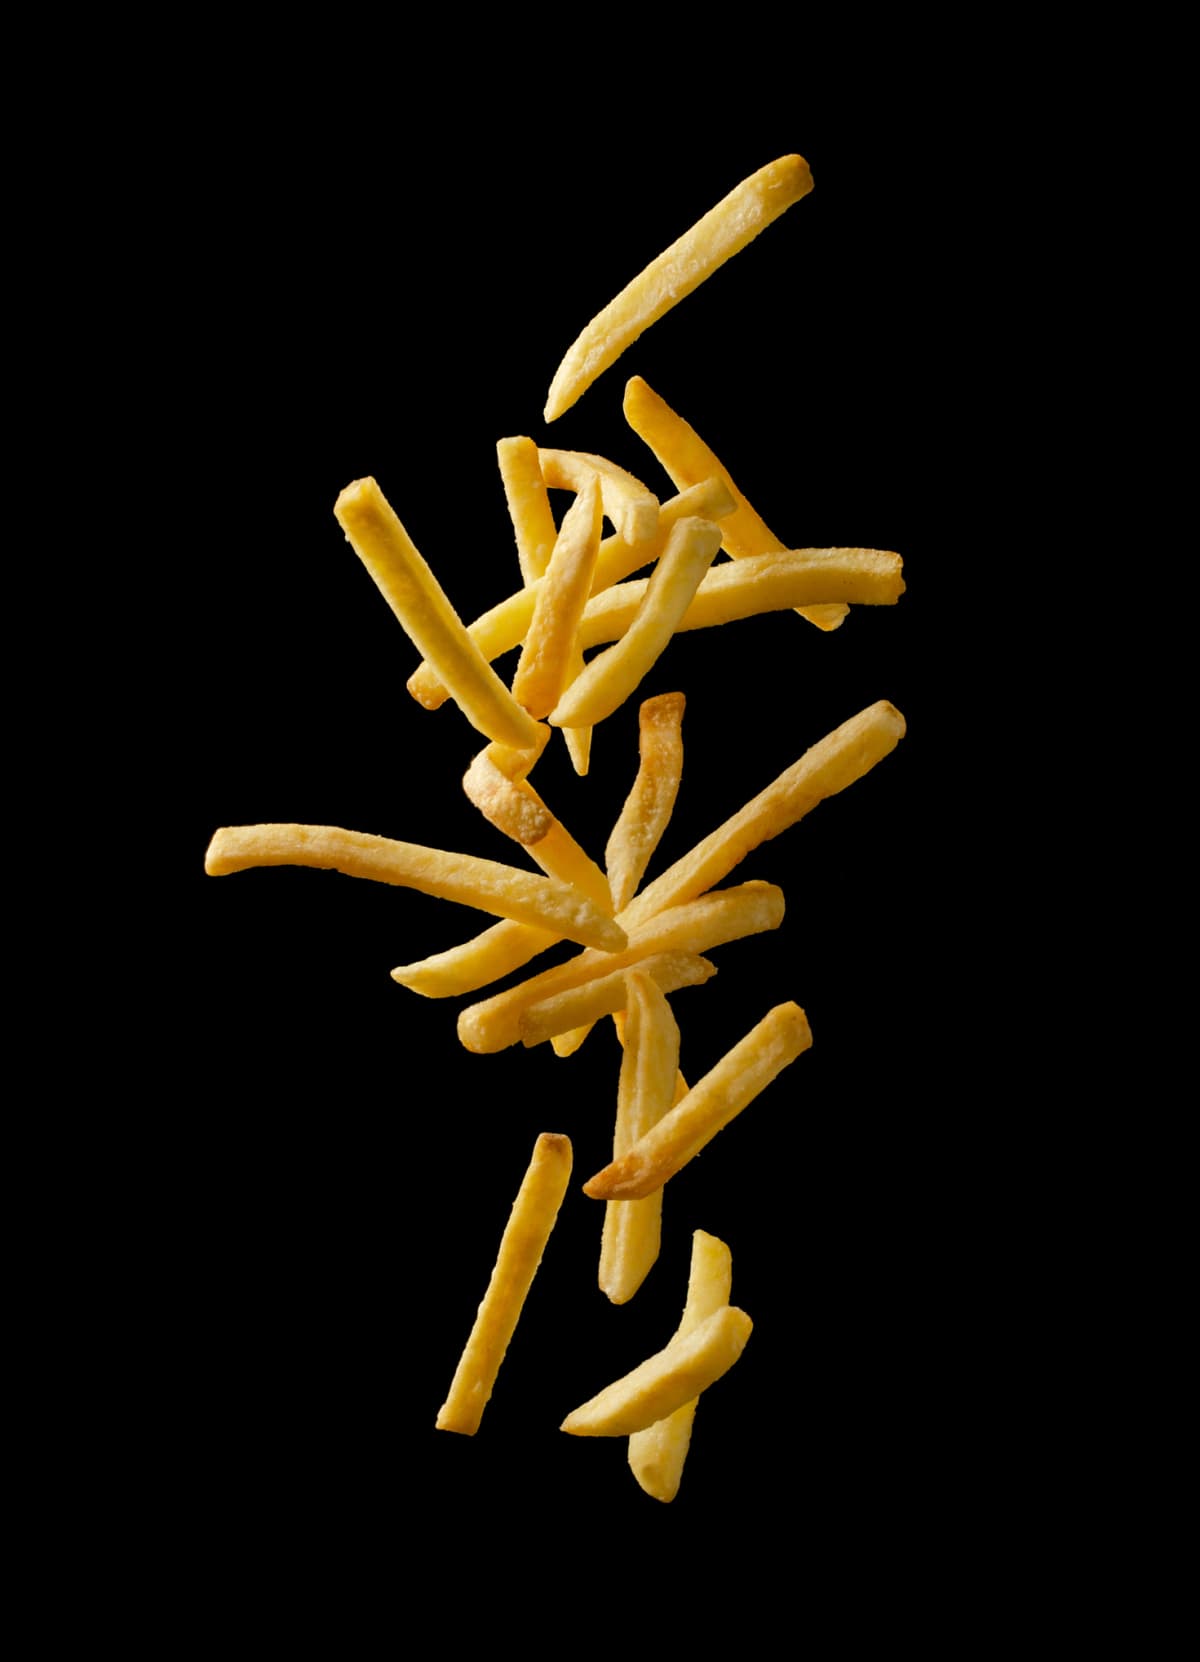 Fries falling against black background